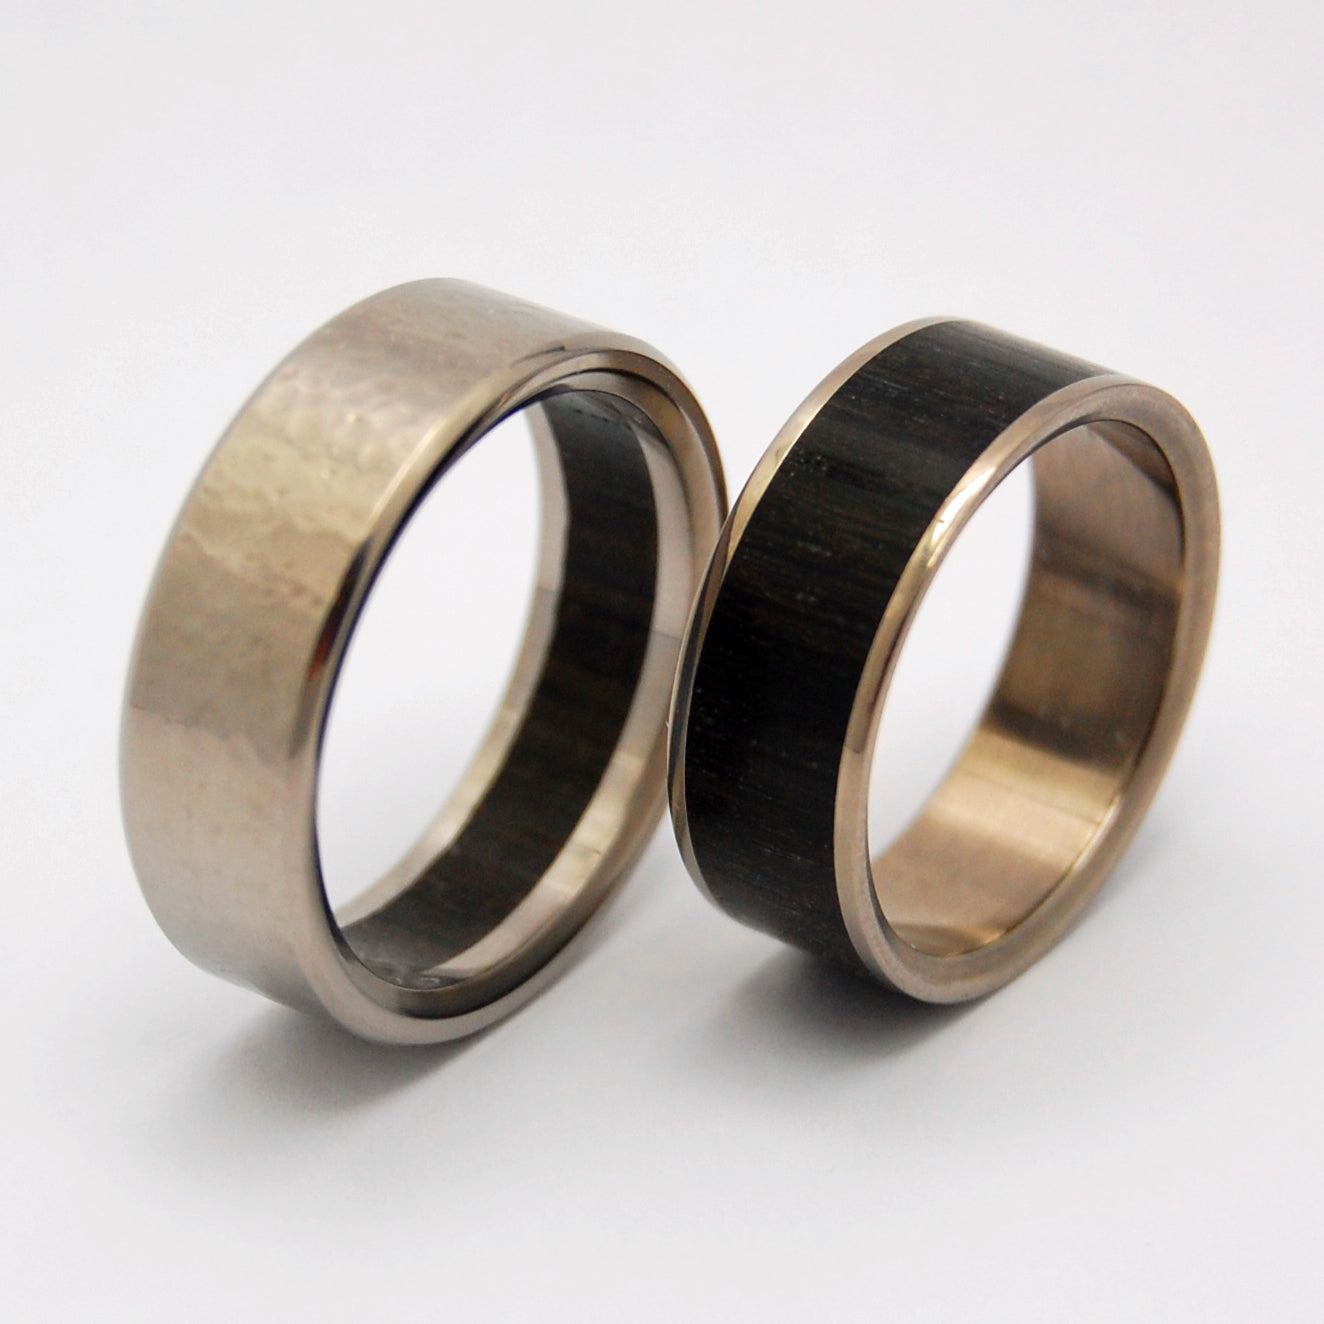 BOG | Aged Bog Oak & Titanium - Unique Wedding Rings - Titanium Wedding Ring Sets - Minter and Richter Designs